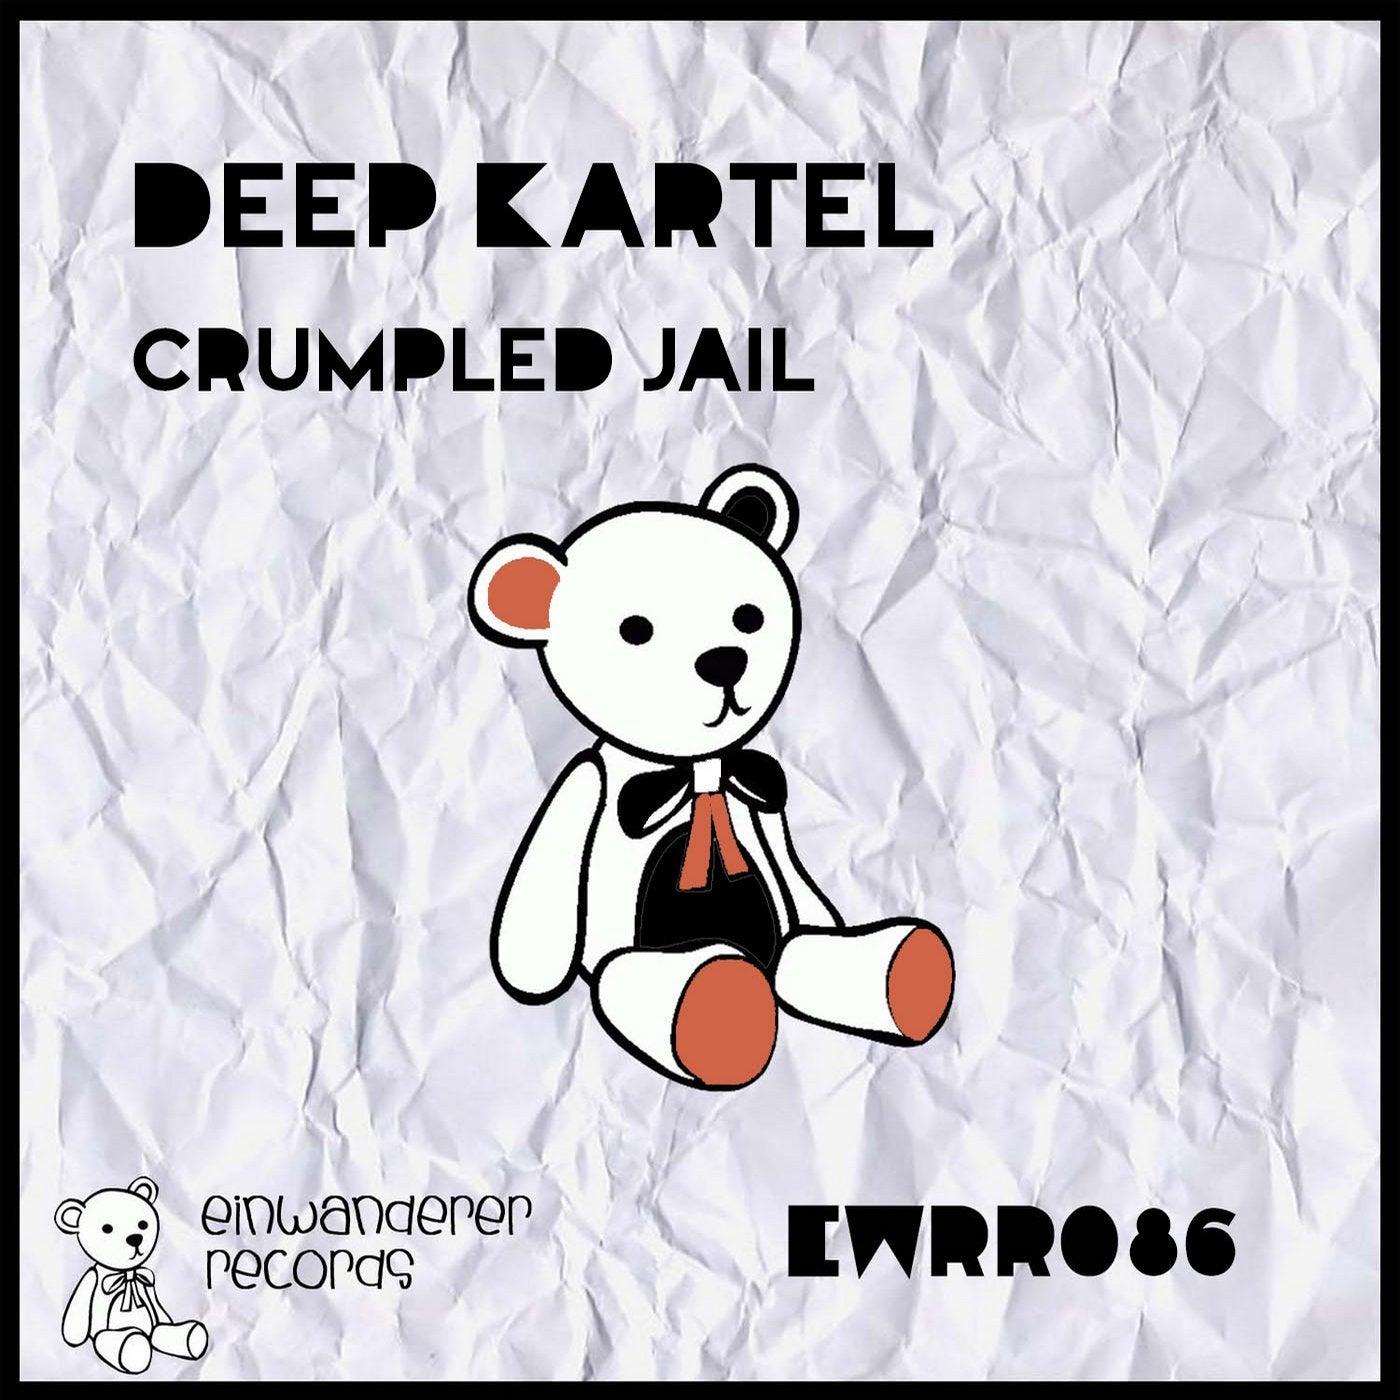 Crumpled Jail